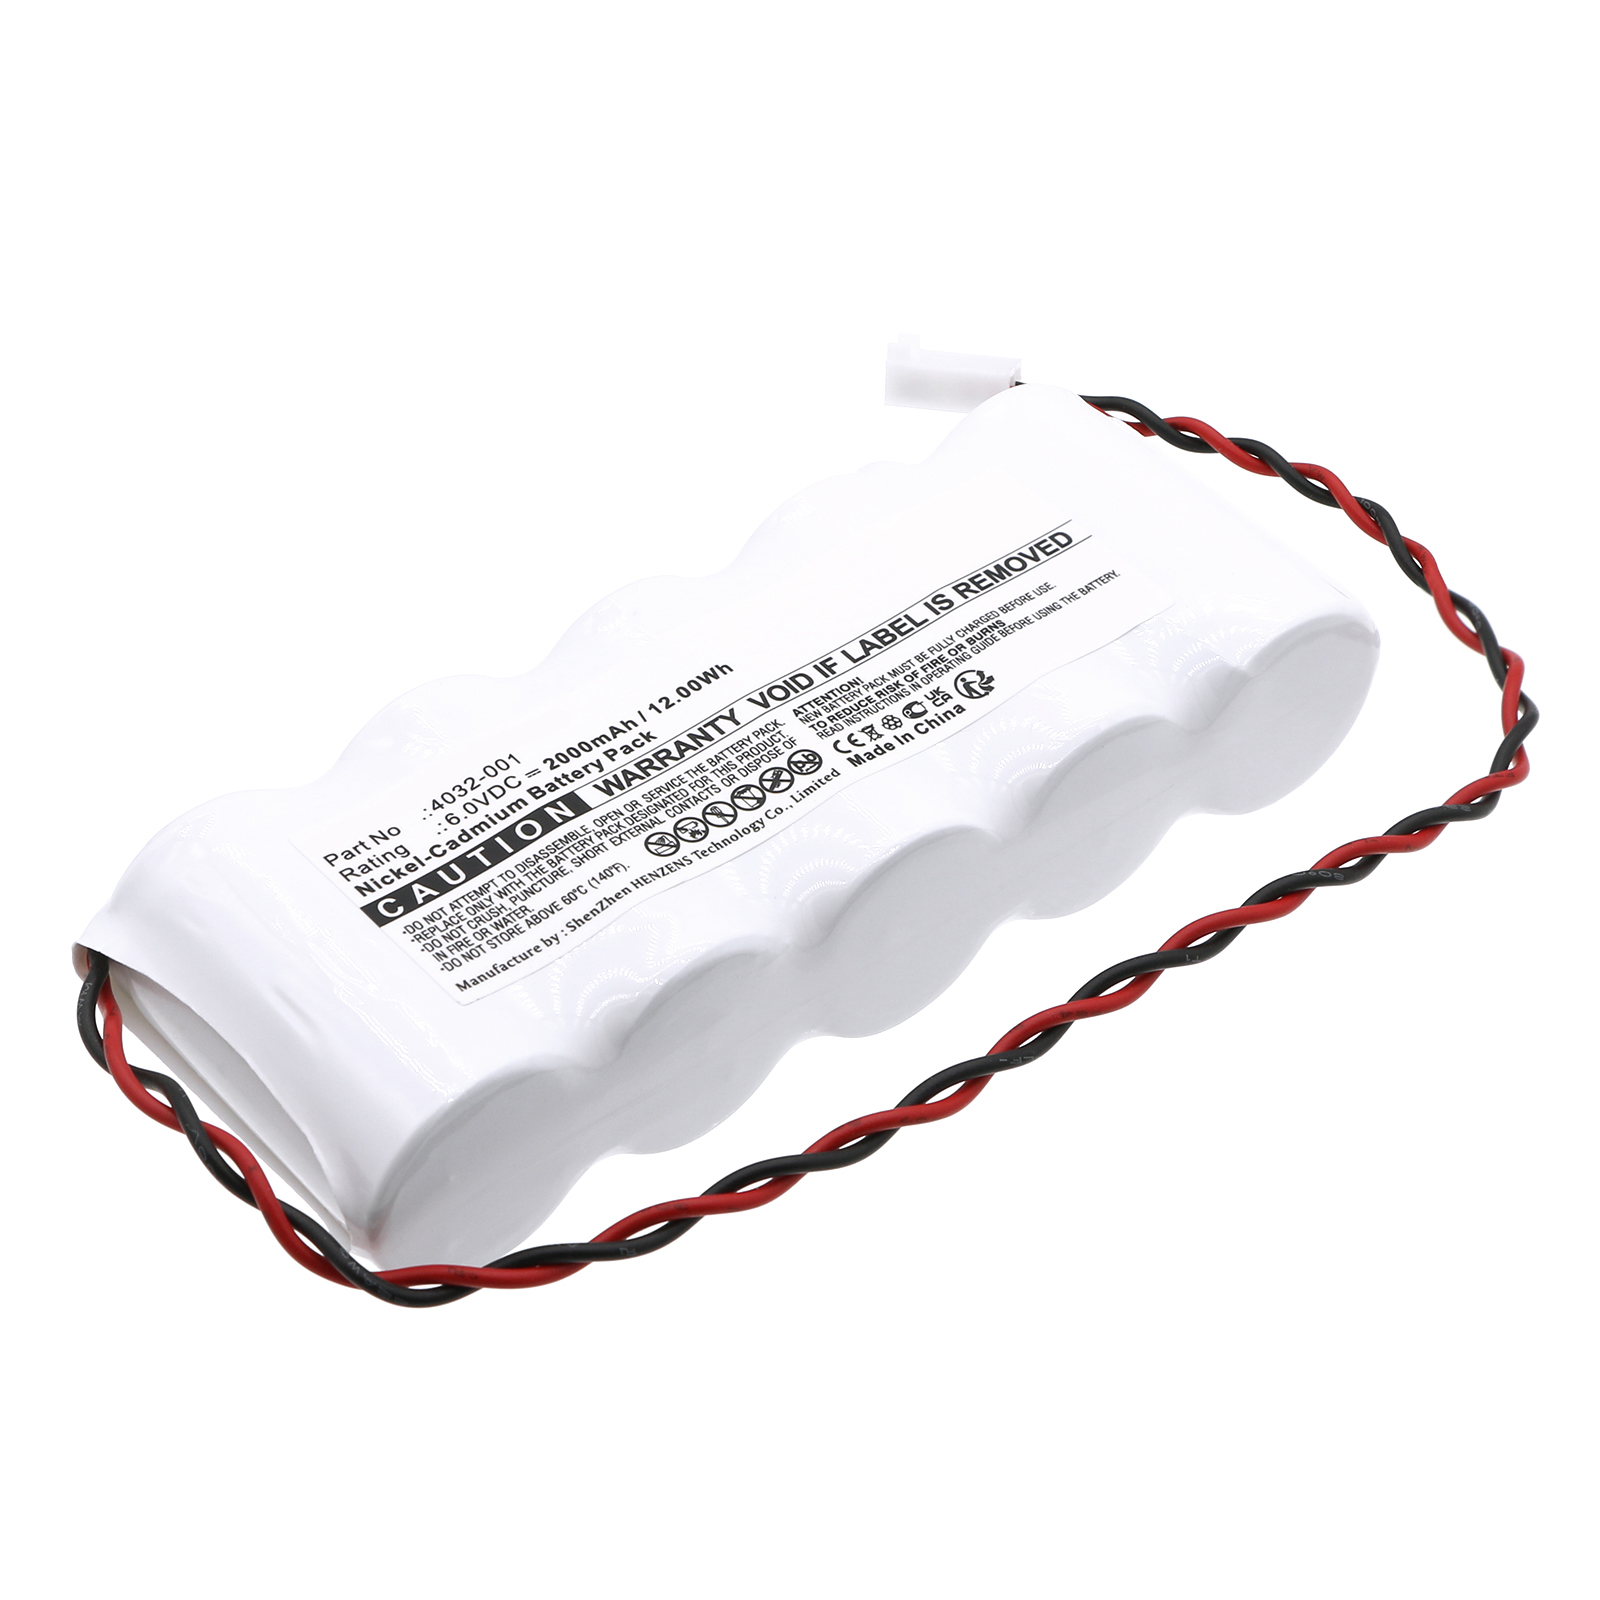 Synergy Digital Medical Battery, Compatible with Nonin 4032-001 Medical Battery (Ni-CD, 6V, 2000mAh)